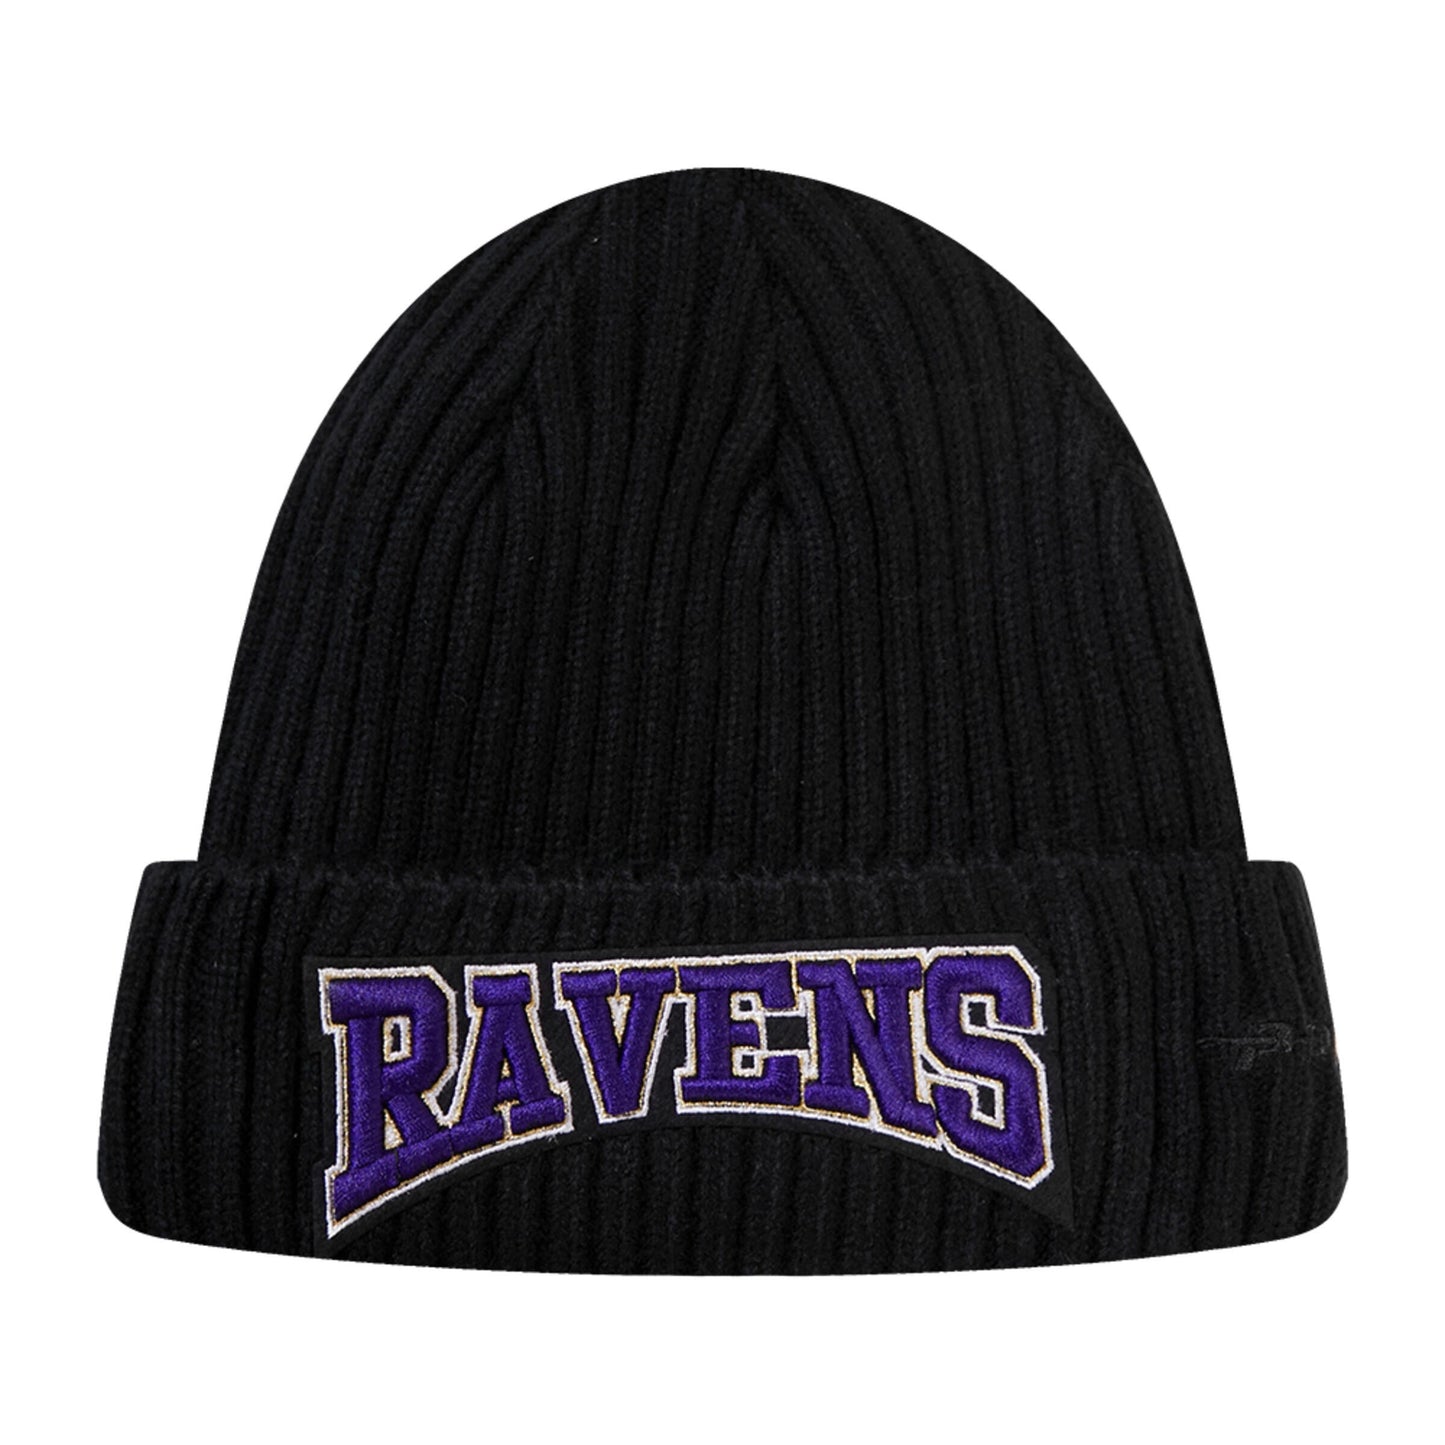 Baltimore Ravens Pro Standard Crest Emblem Beanie Knit Hat -Black